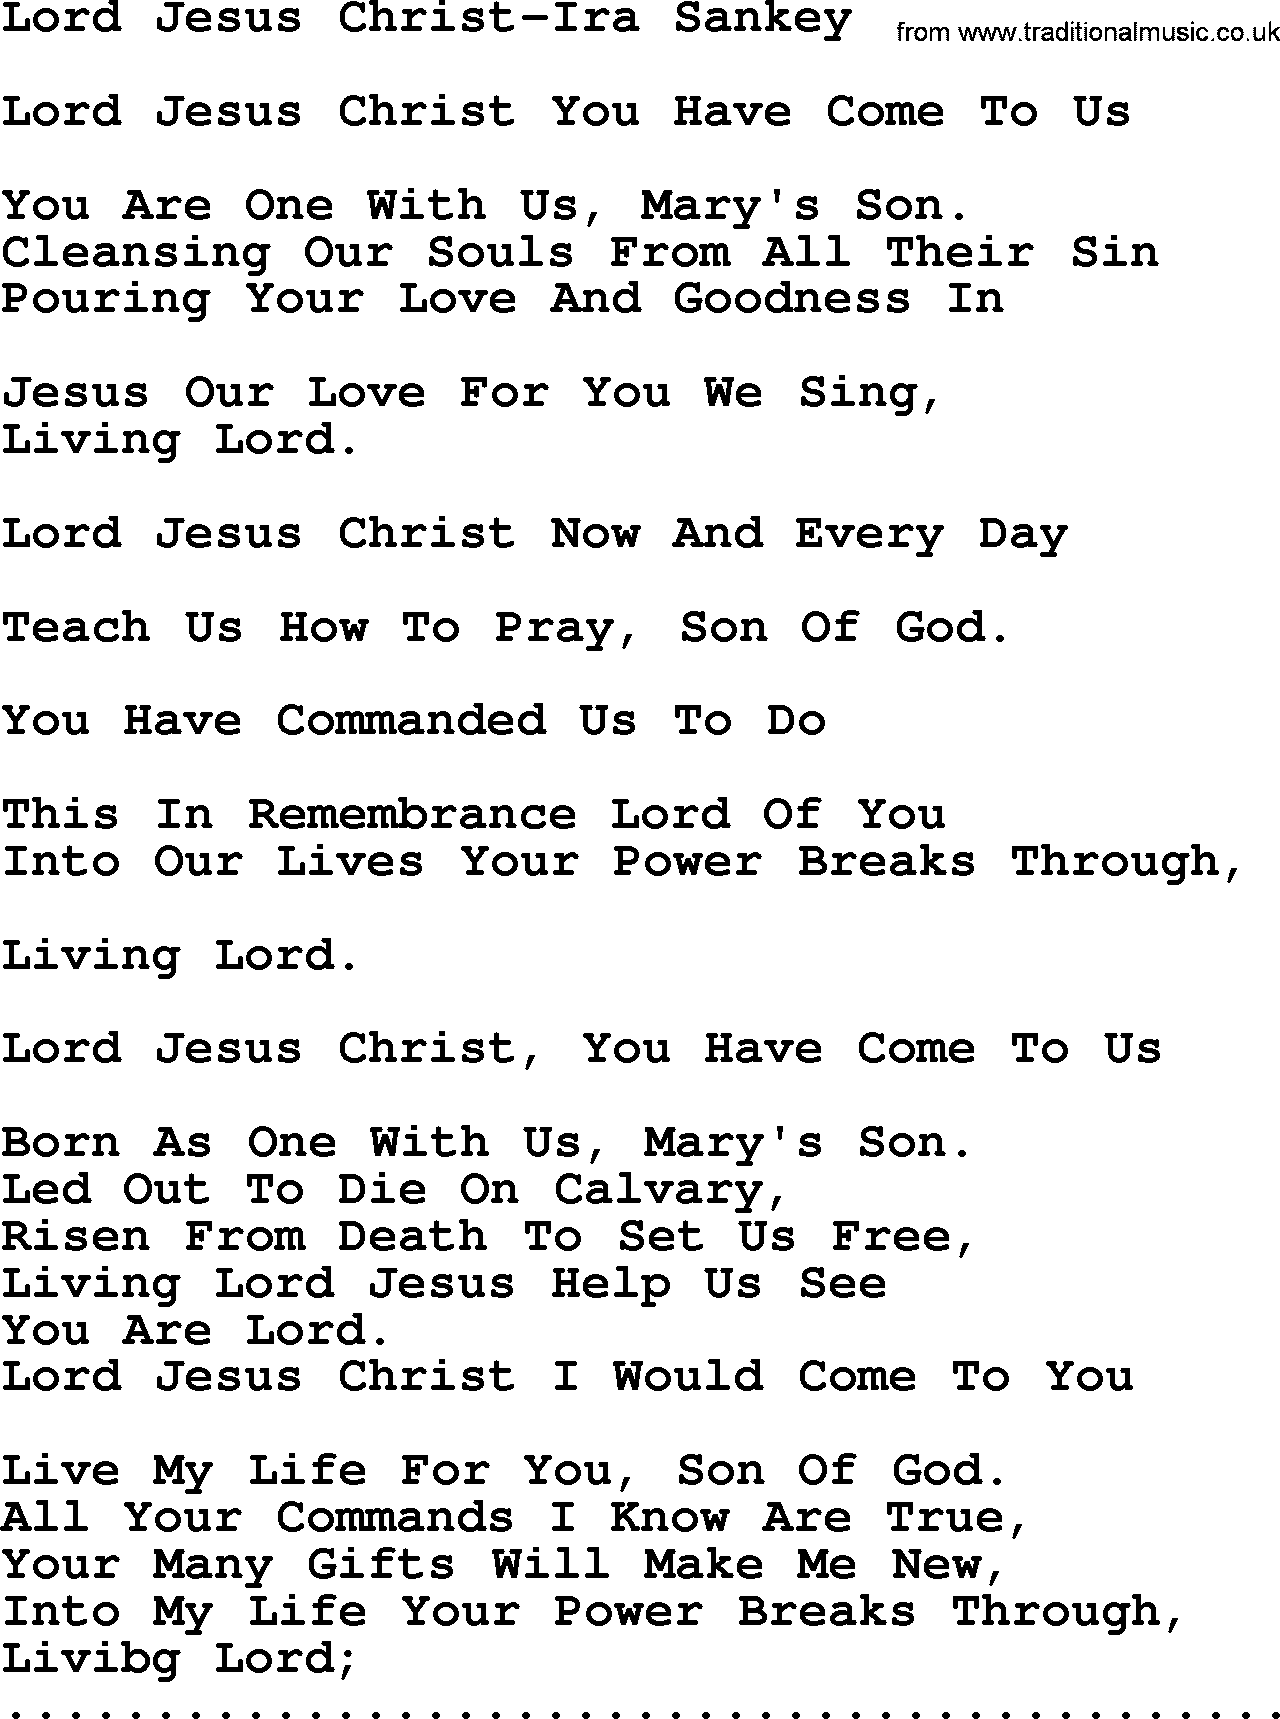 Ira Sankey hymn: Lord Jesus Christ-Ira Sankey, lyrics